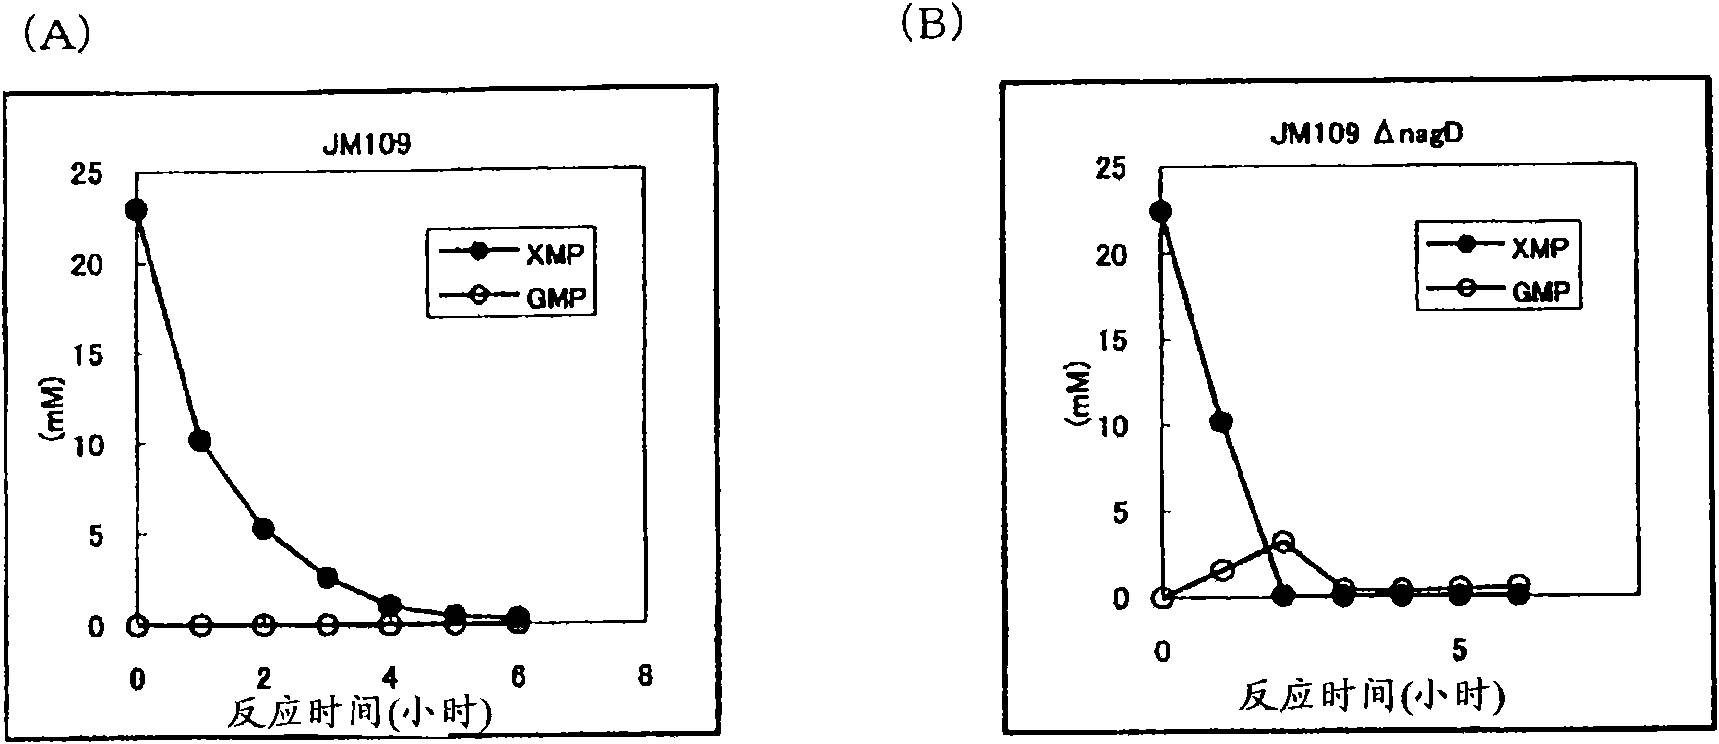 Method for producing 5'-guanylic acid